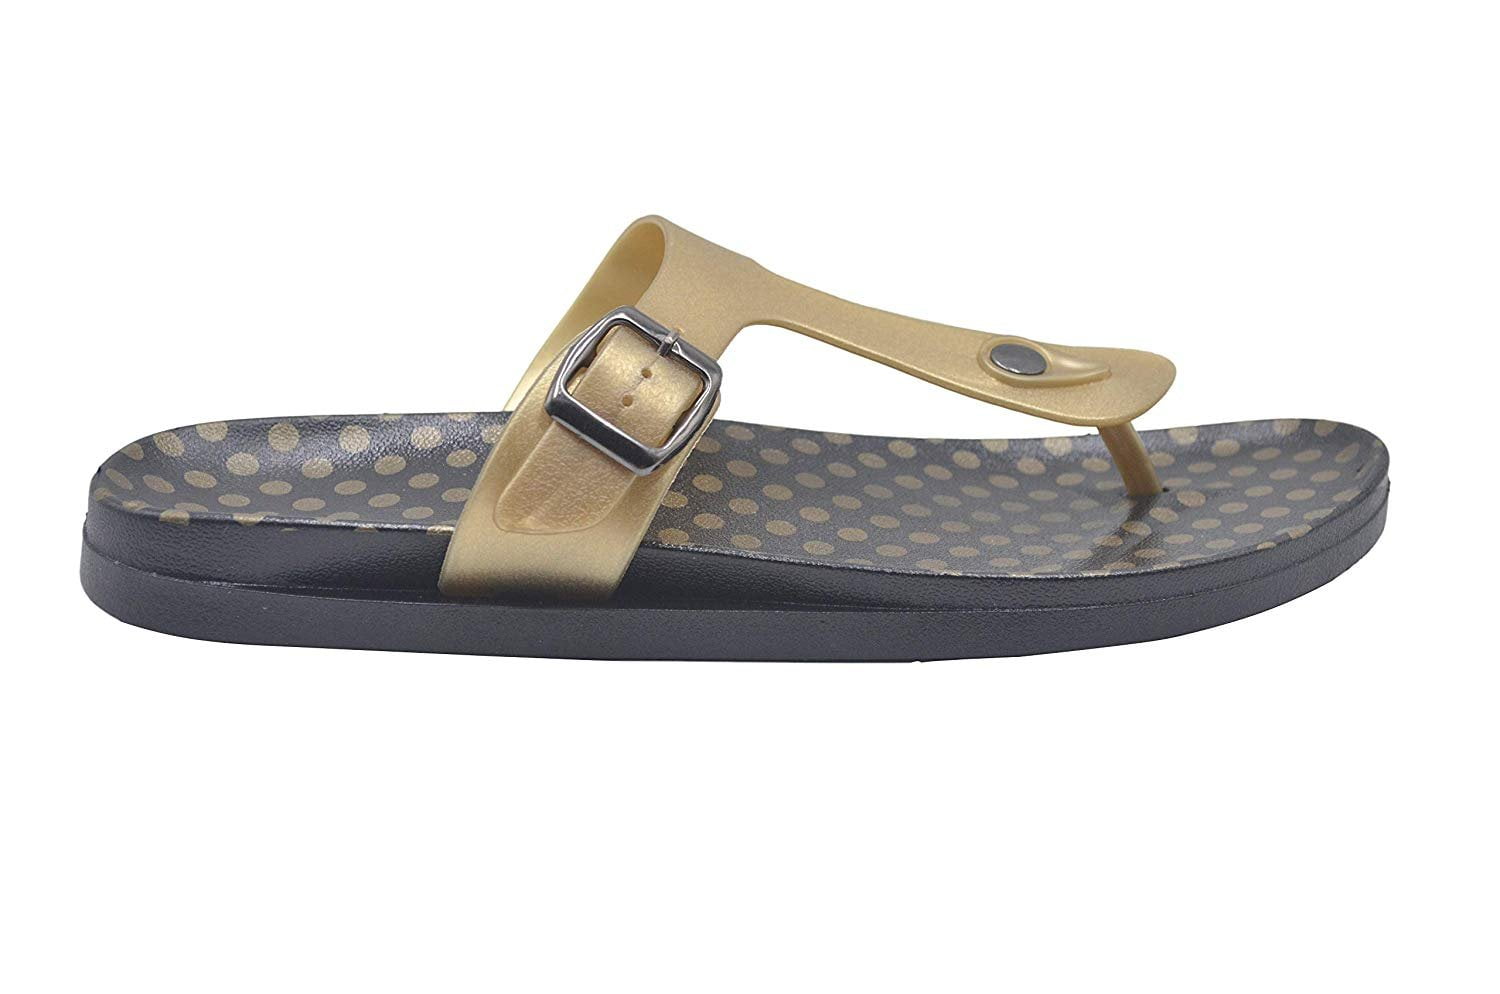 gold sandals size 5